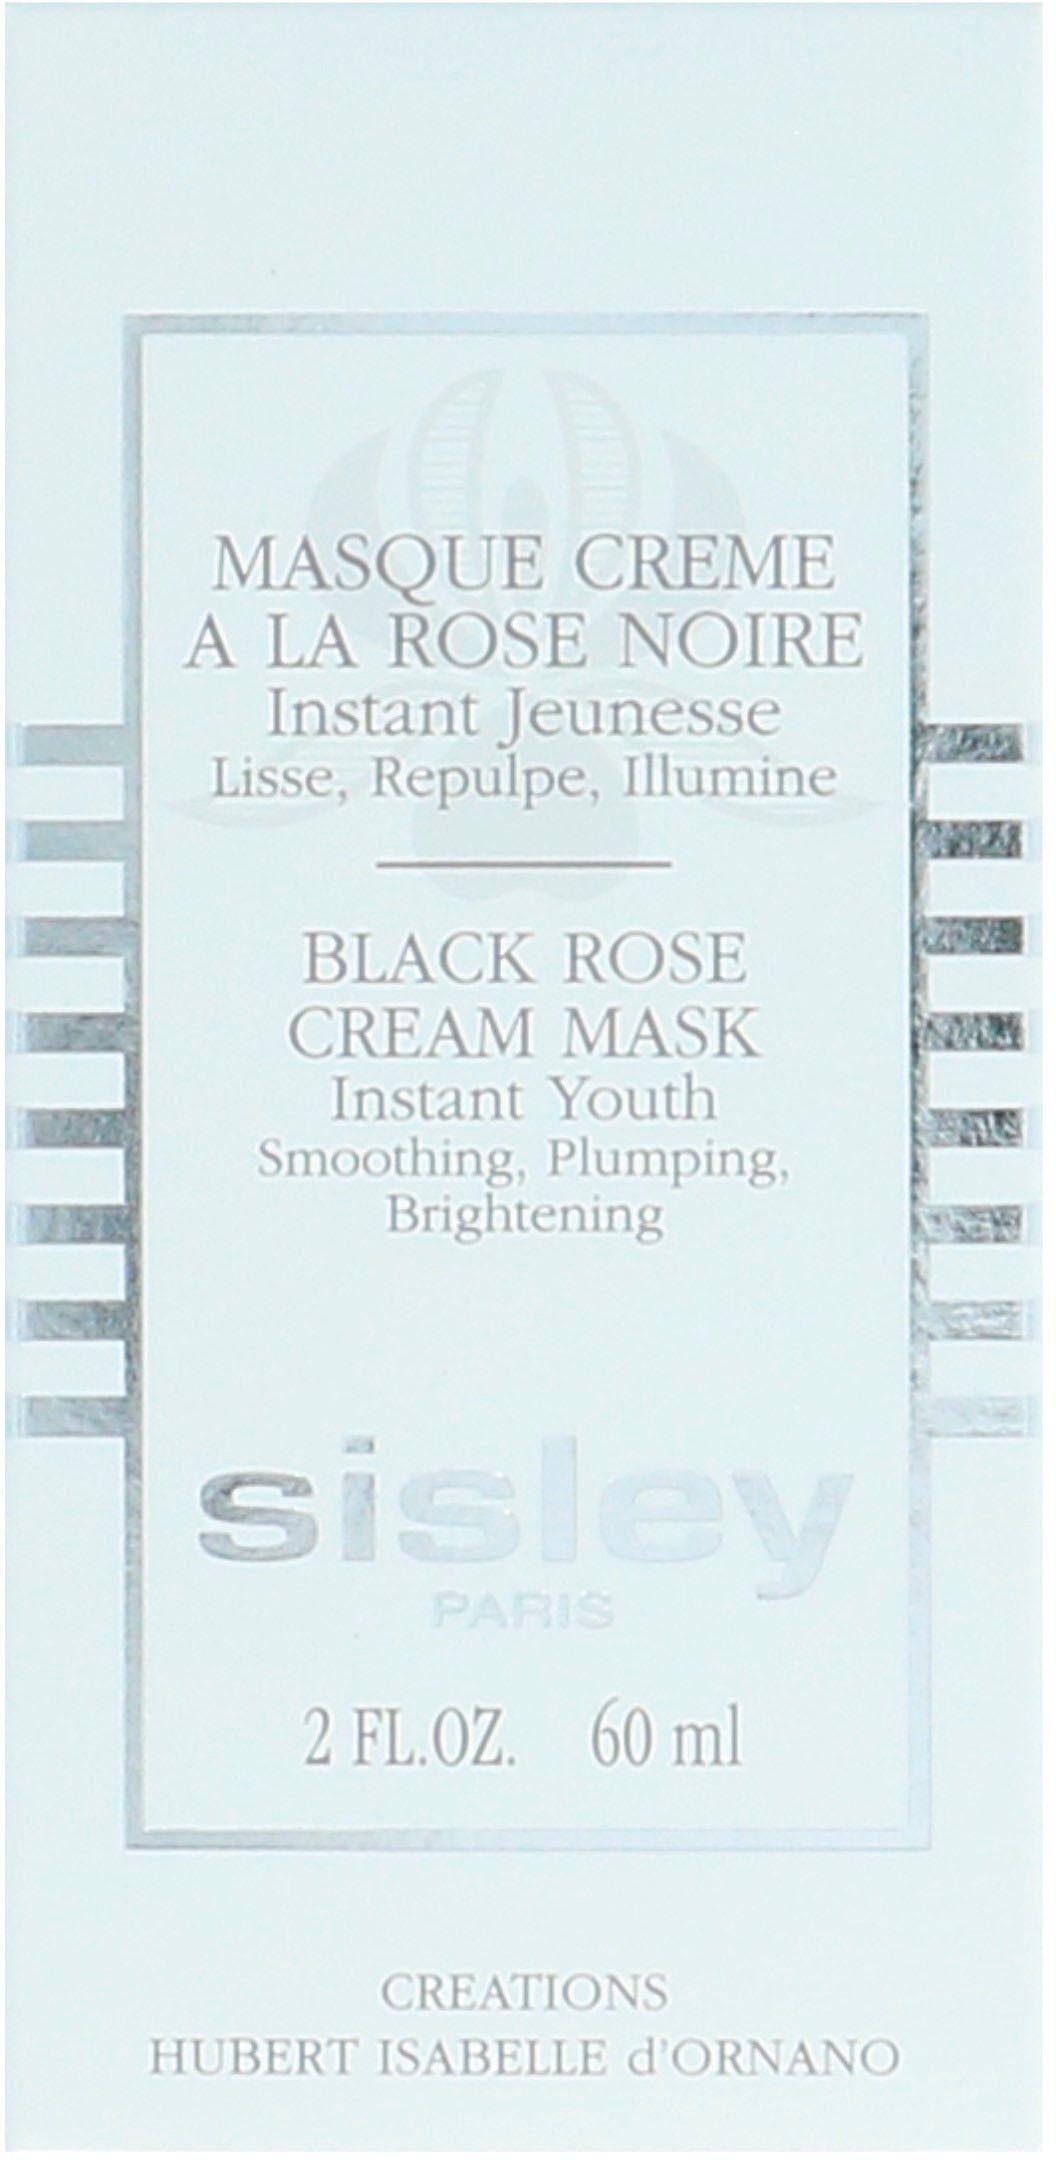 Mask sisley Cream Black Rose Gesichtsmaske